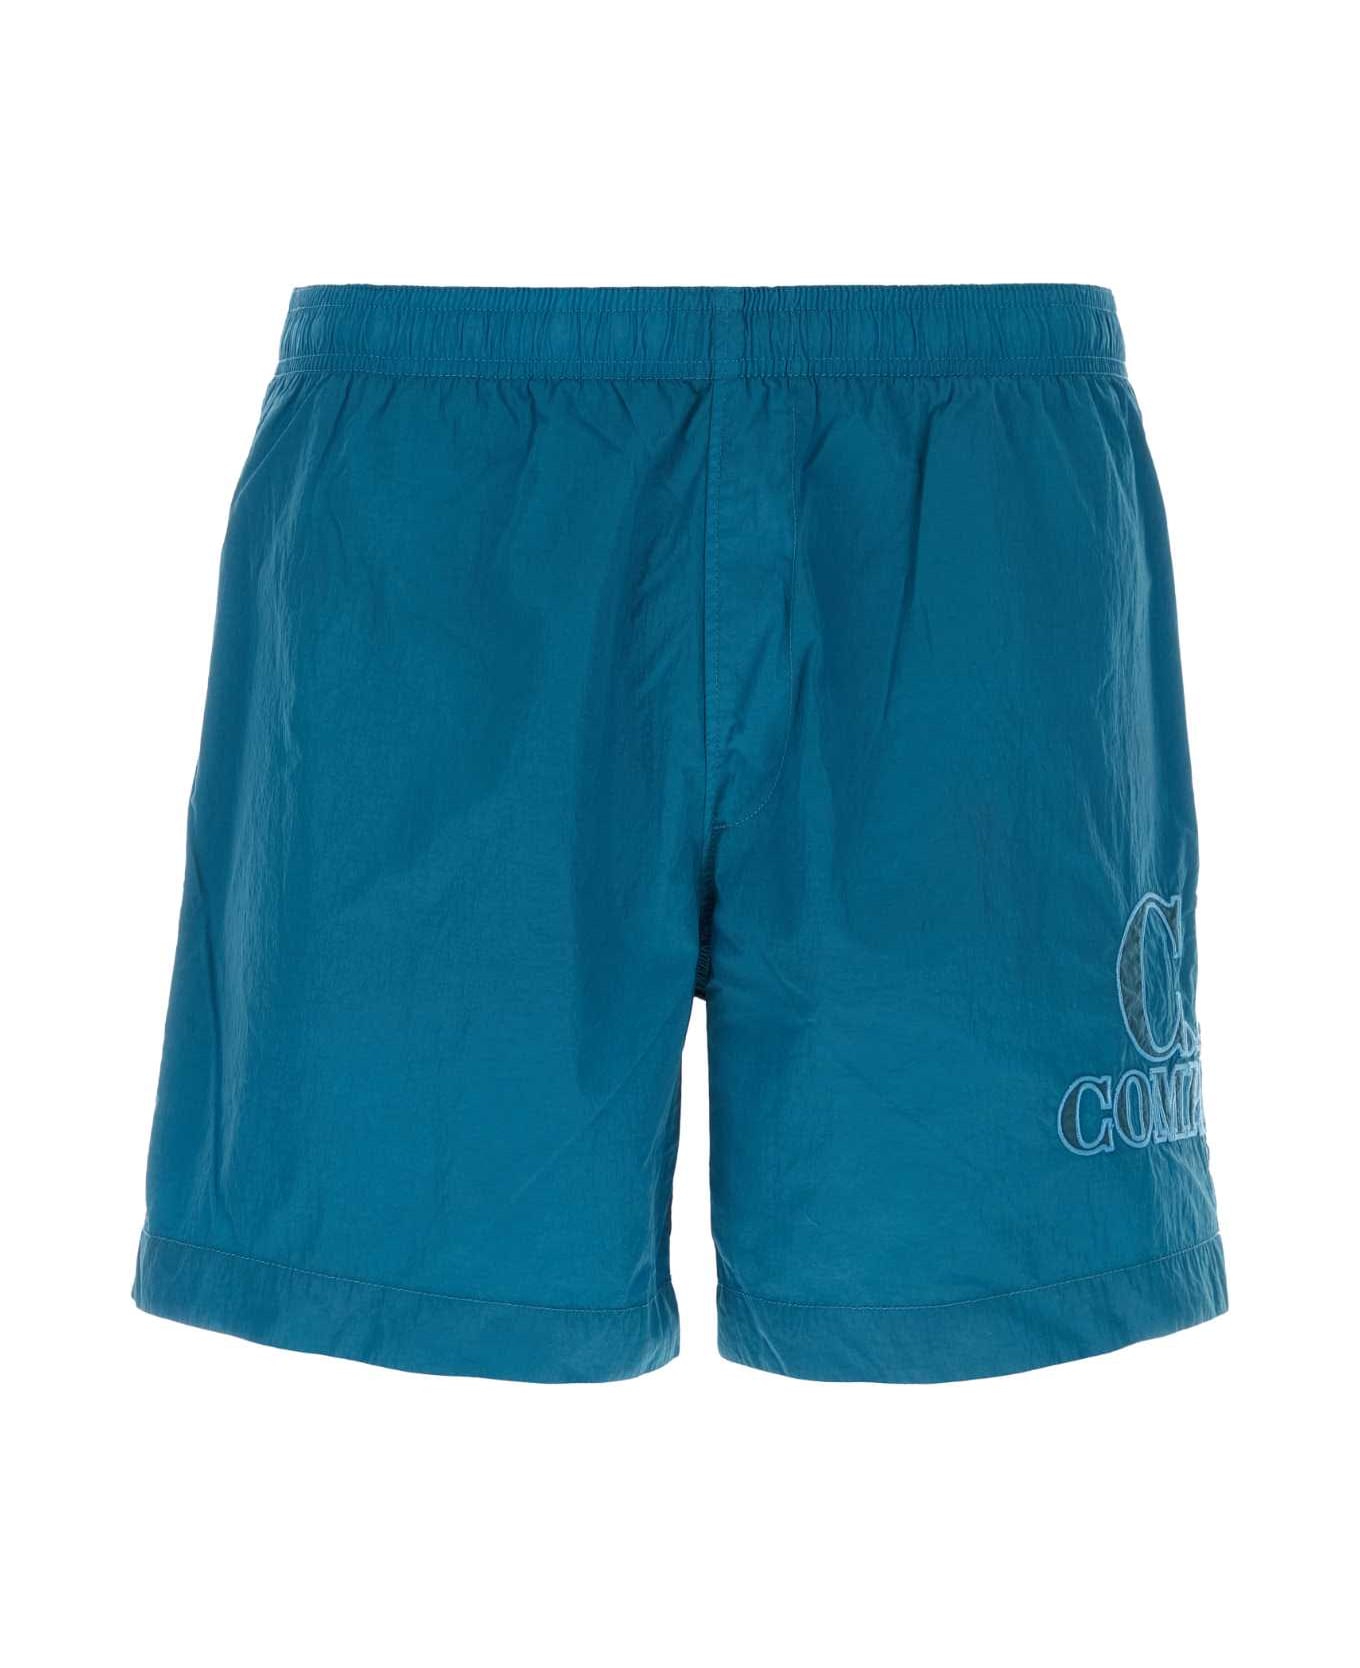 C.P. Company Air Force Blue Nylon Swimming Shorts - INKBLUE 水着